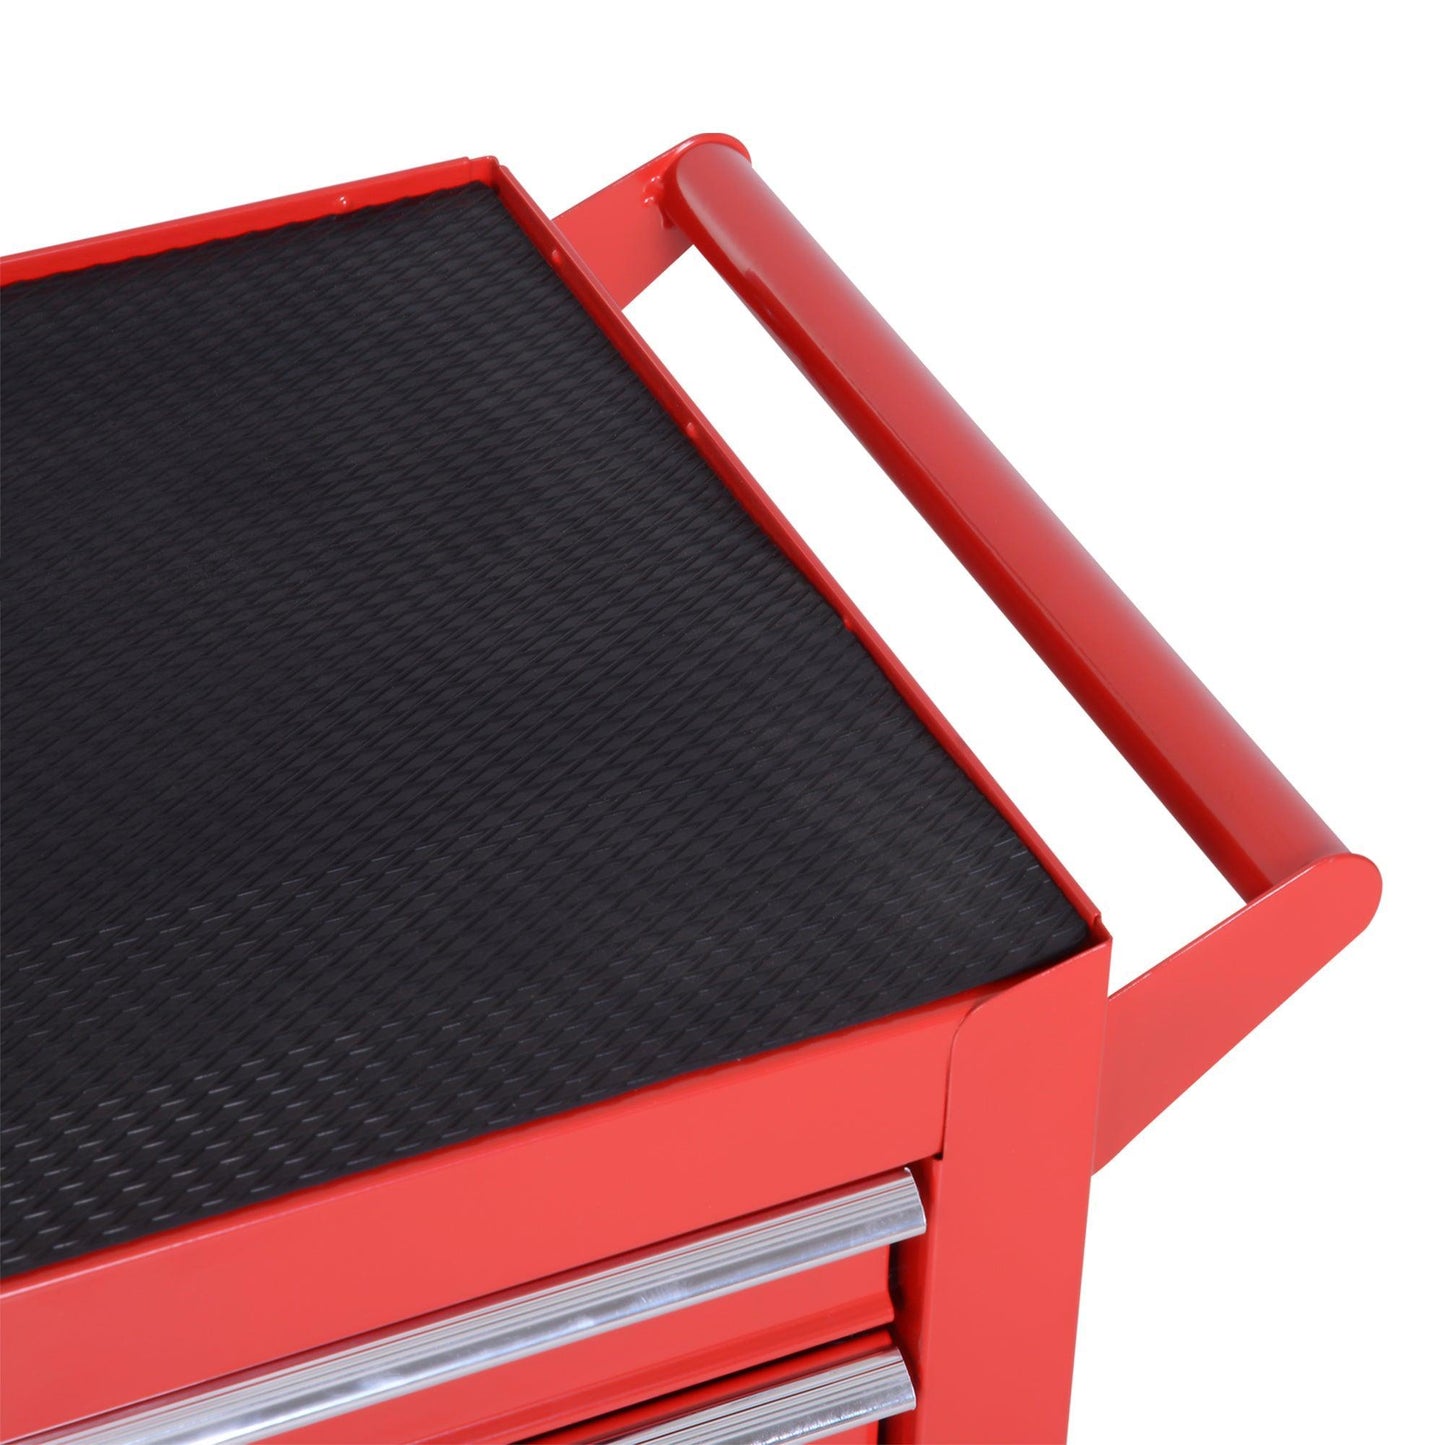 DURHAND 7-Drawer Rolling Tool Cabinet - Red - ALL4U RETAILER LTD